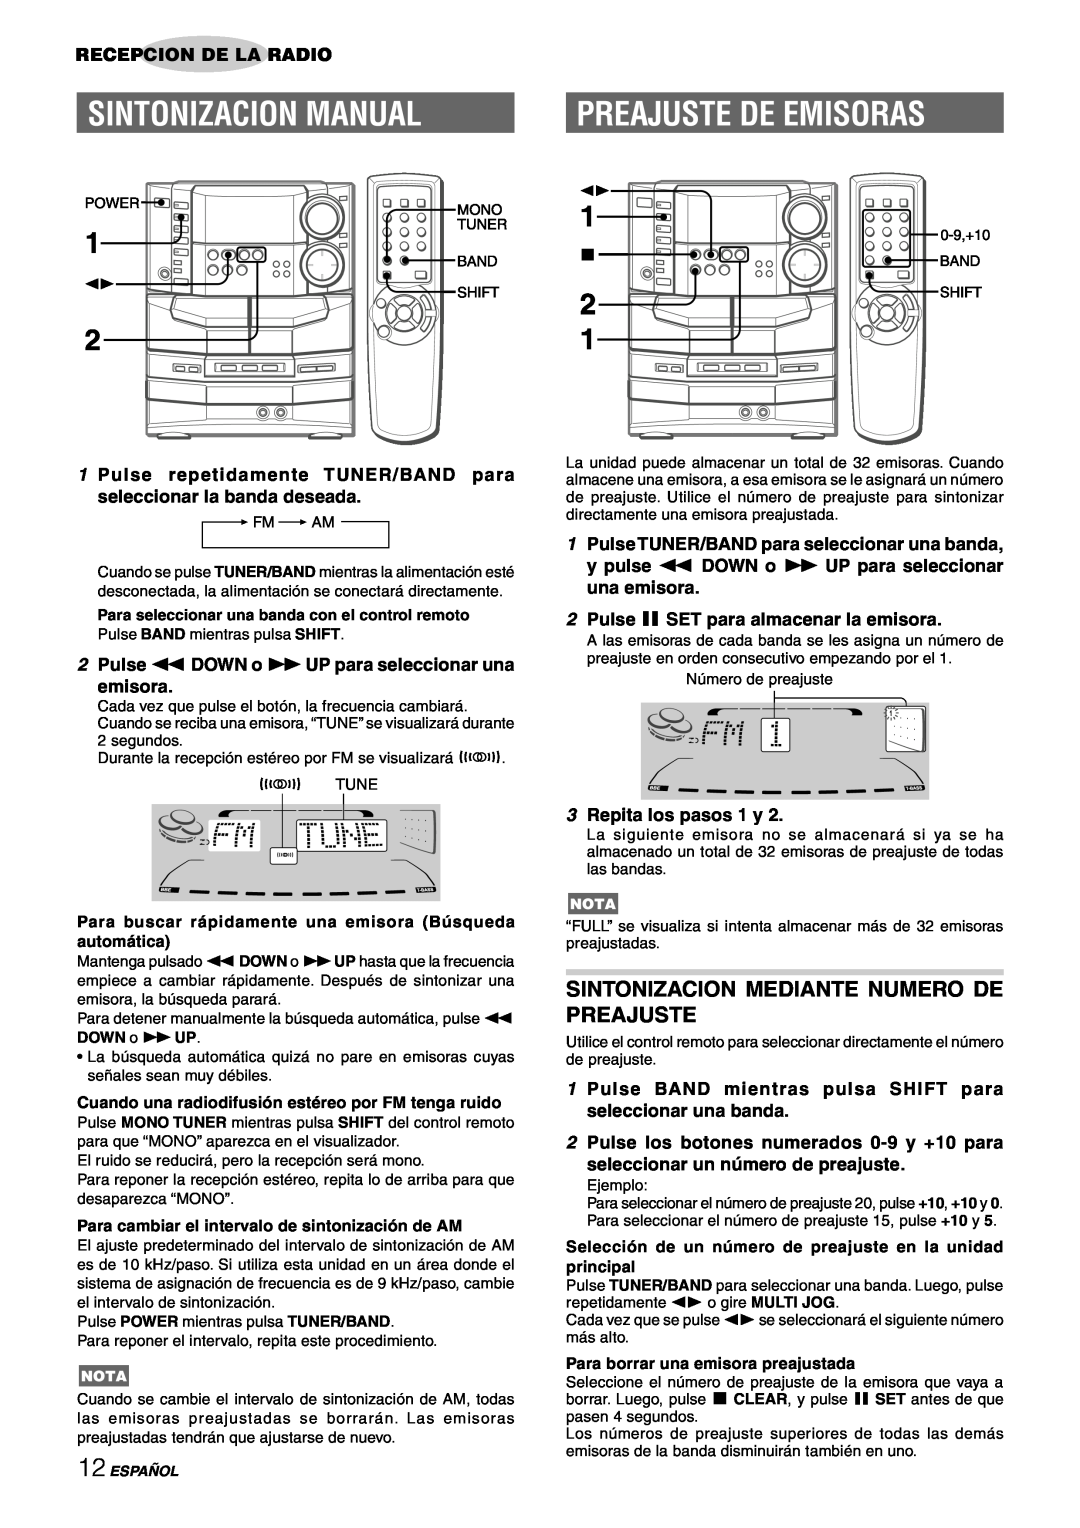 Sony NSX-AJ80 manual Sintonizacion Manual, Preajuste De Emisoras, Sintonizacion Mediante Numero De Preajuste 